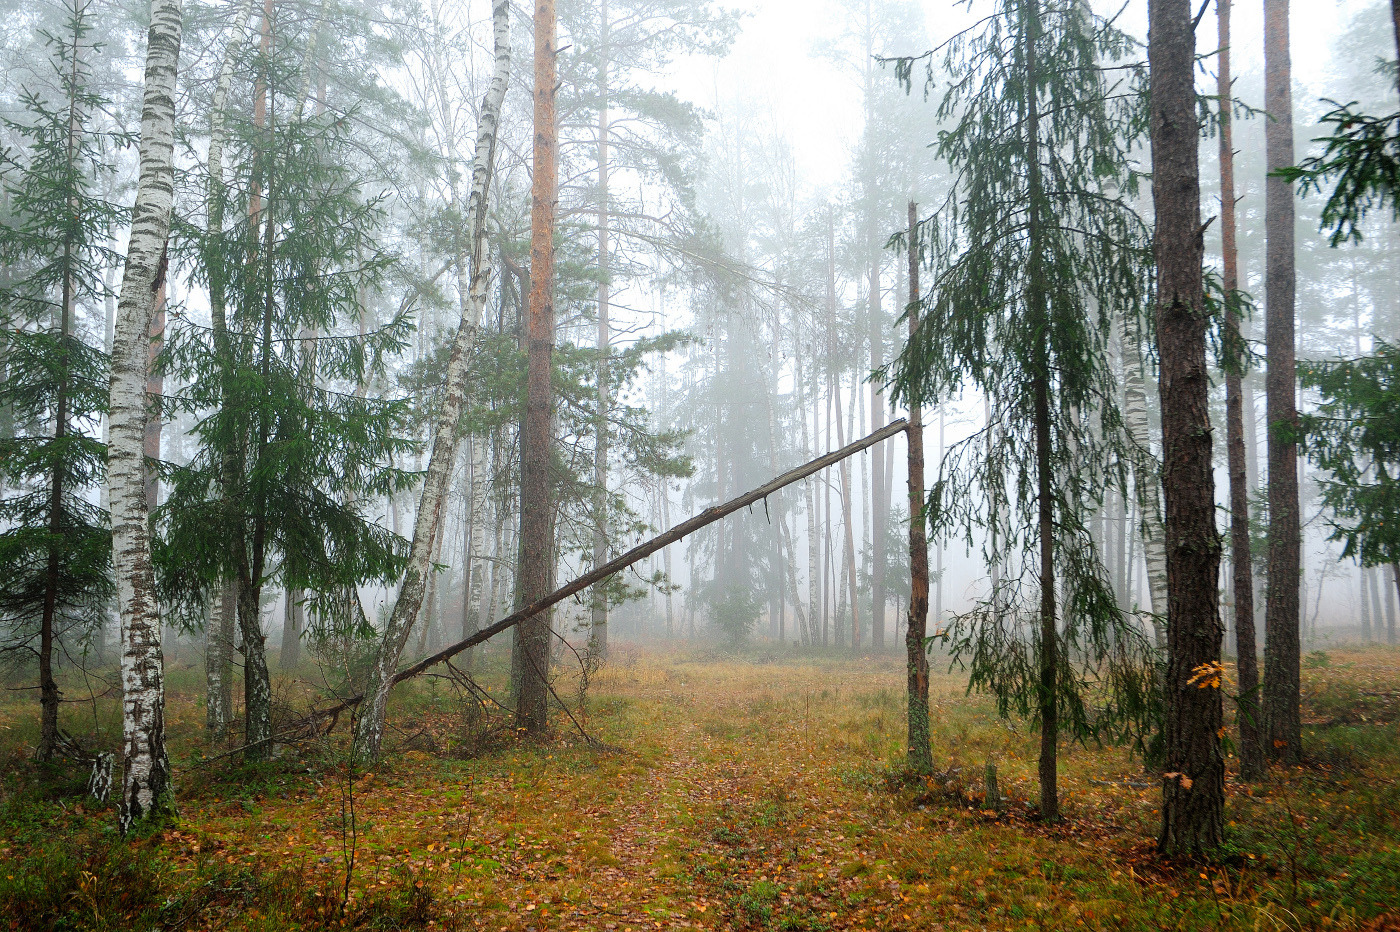 Осень | Фотограф Стас Аврамчик | foto.by фото.бай